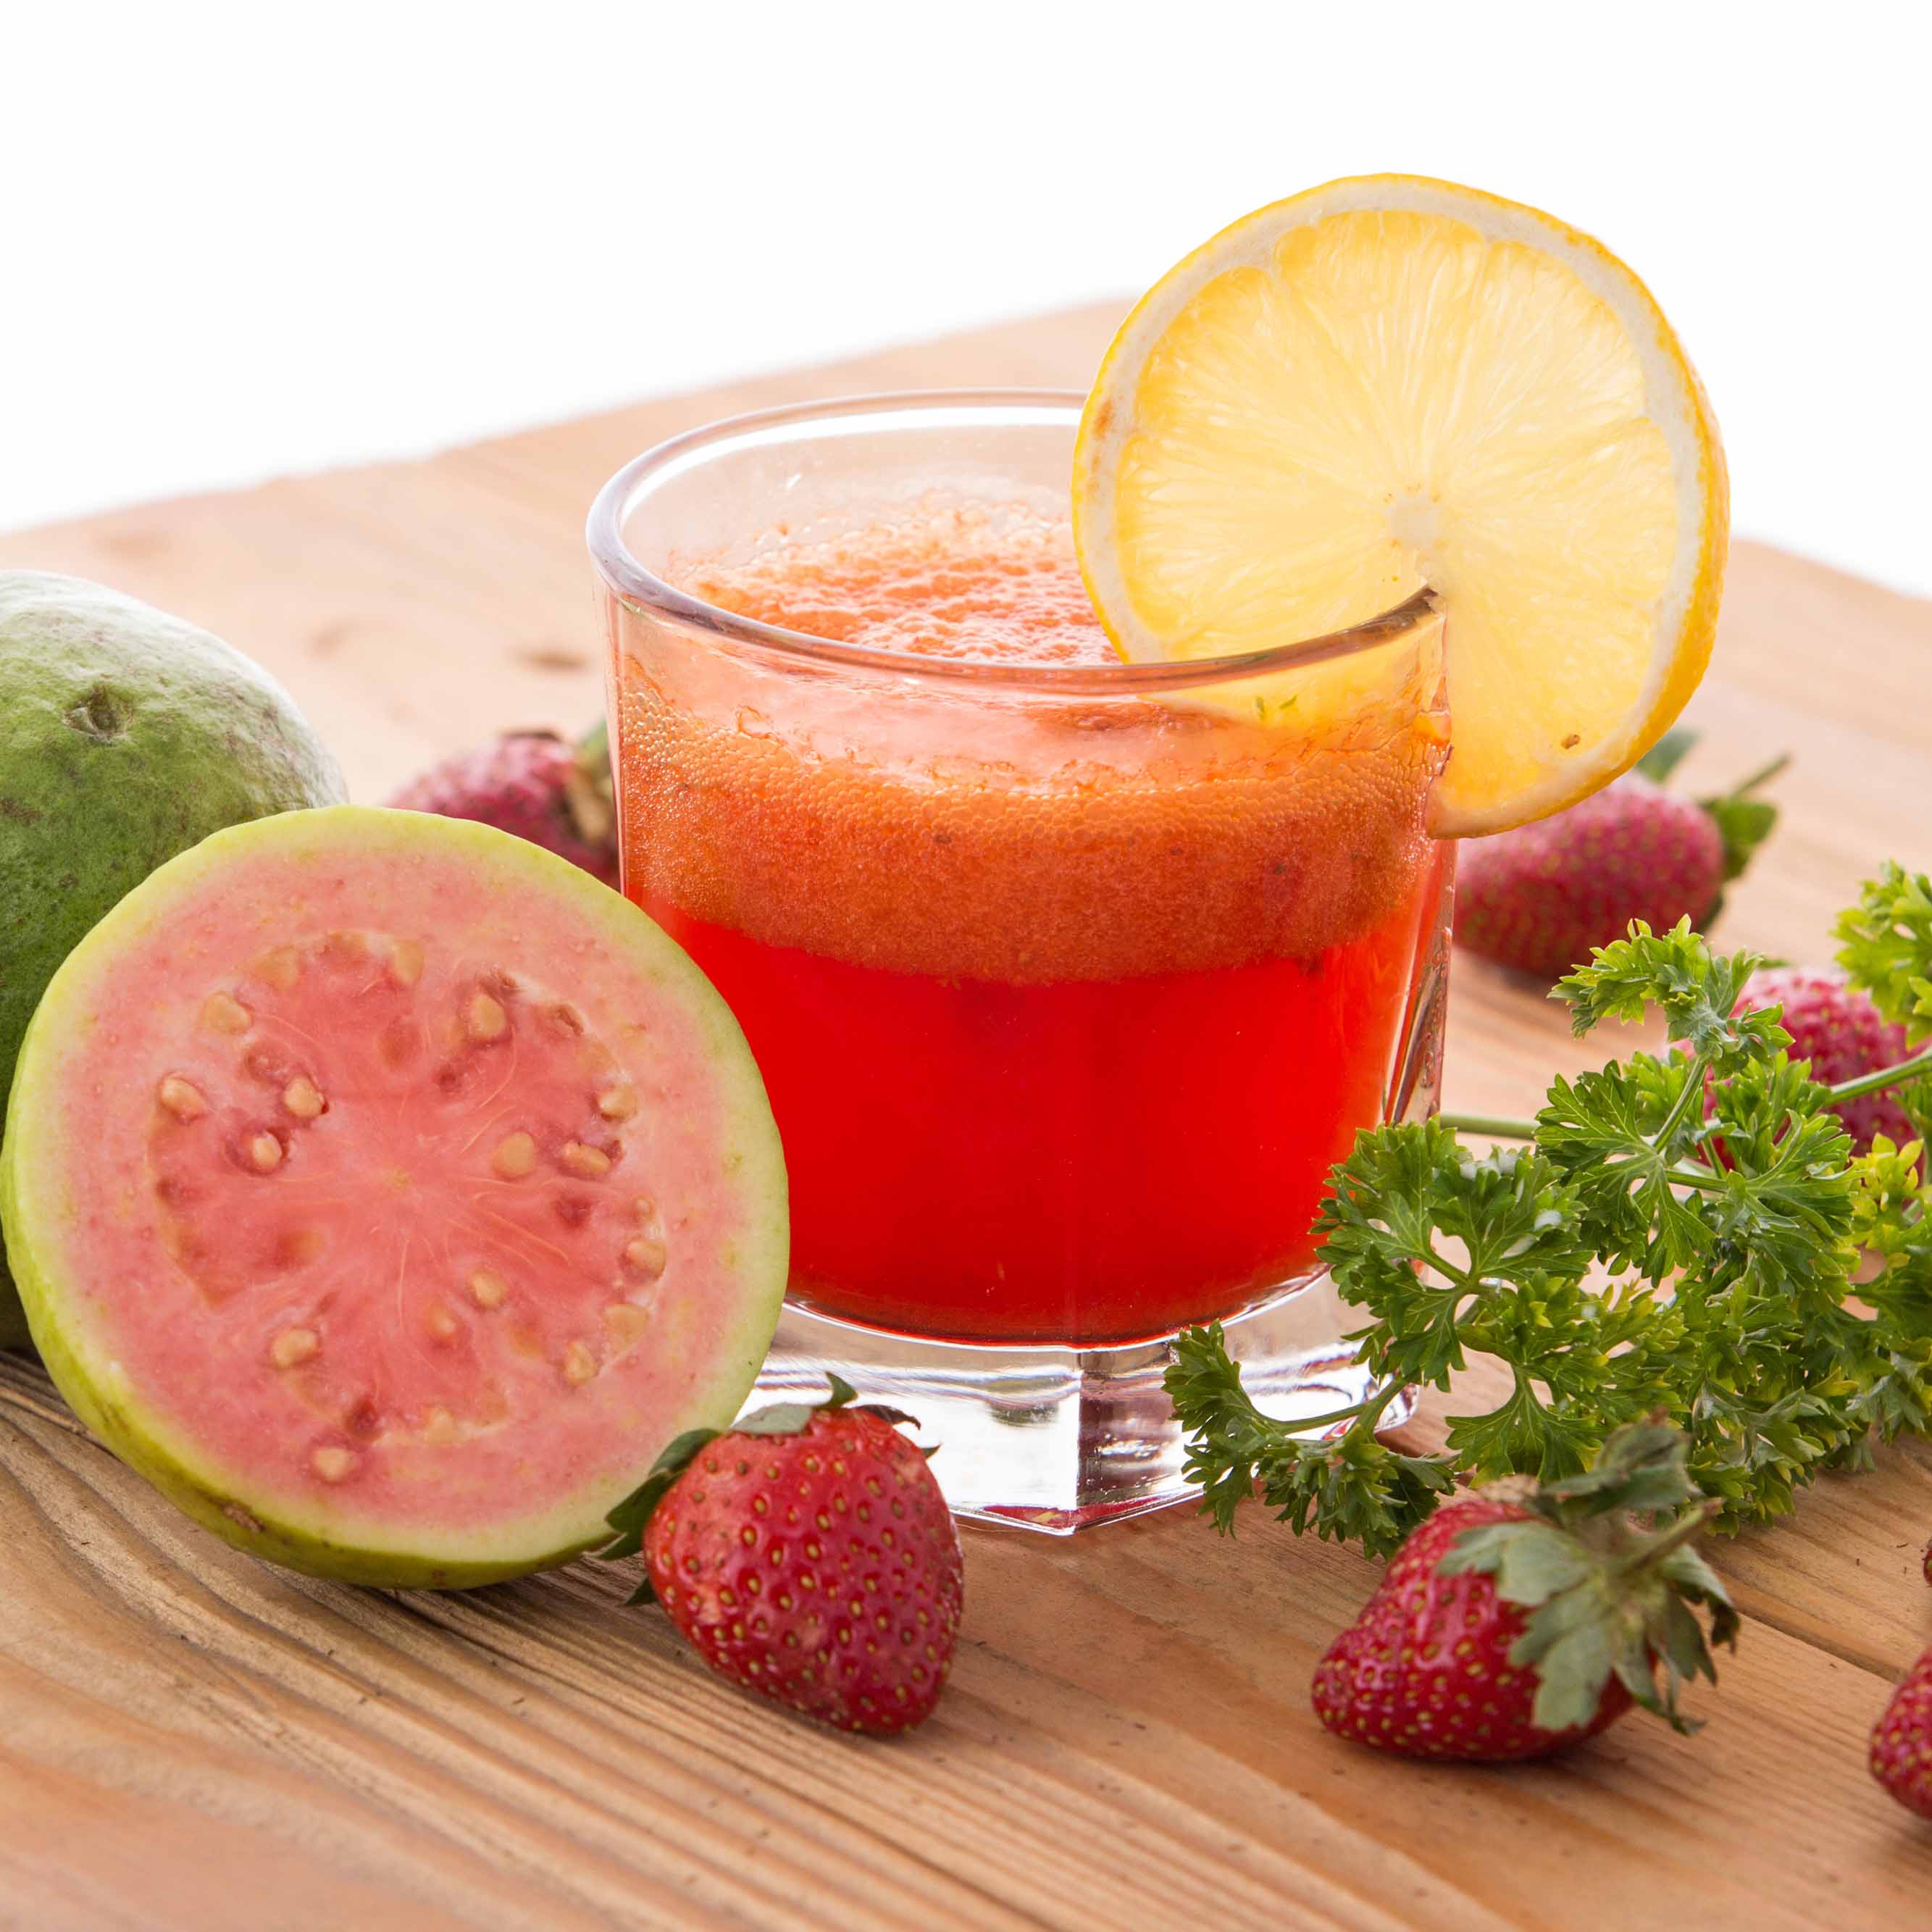 Strawberry Guava Fragrance Purenature Nz